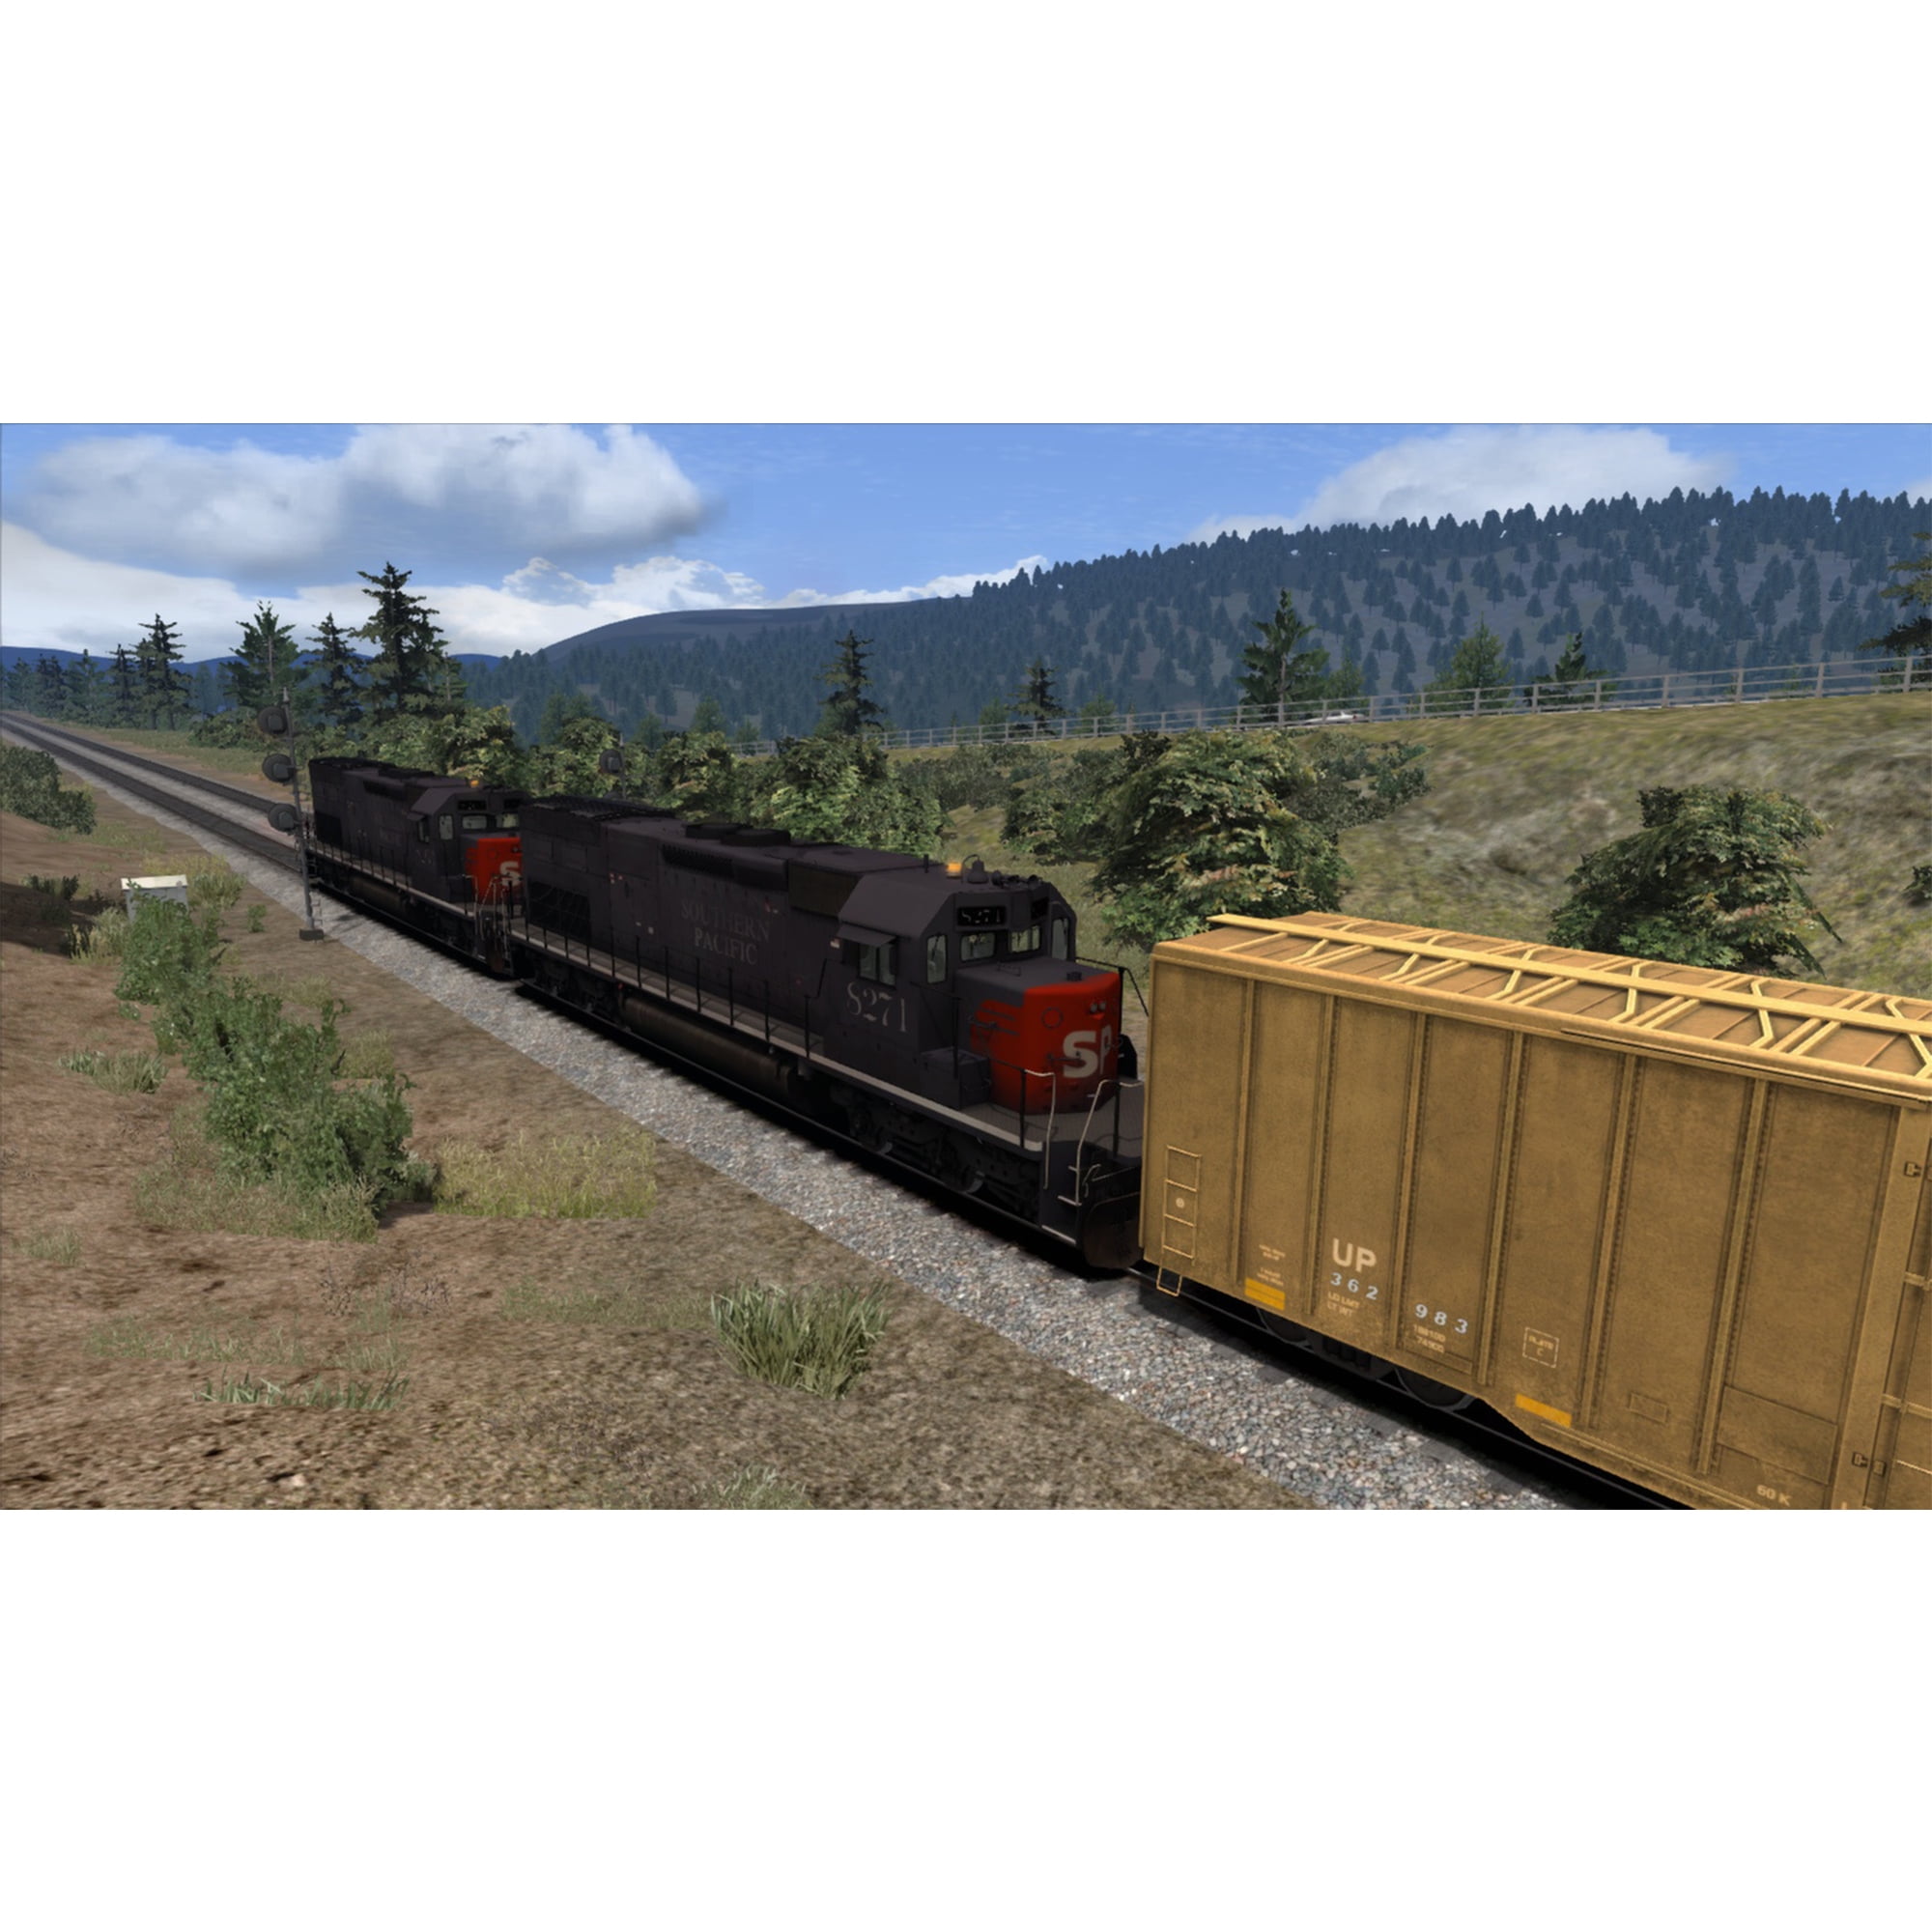 Dutch Railroad Crossing Roblox